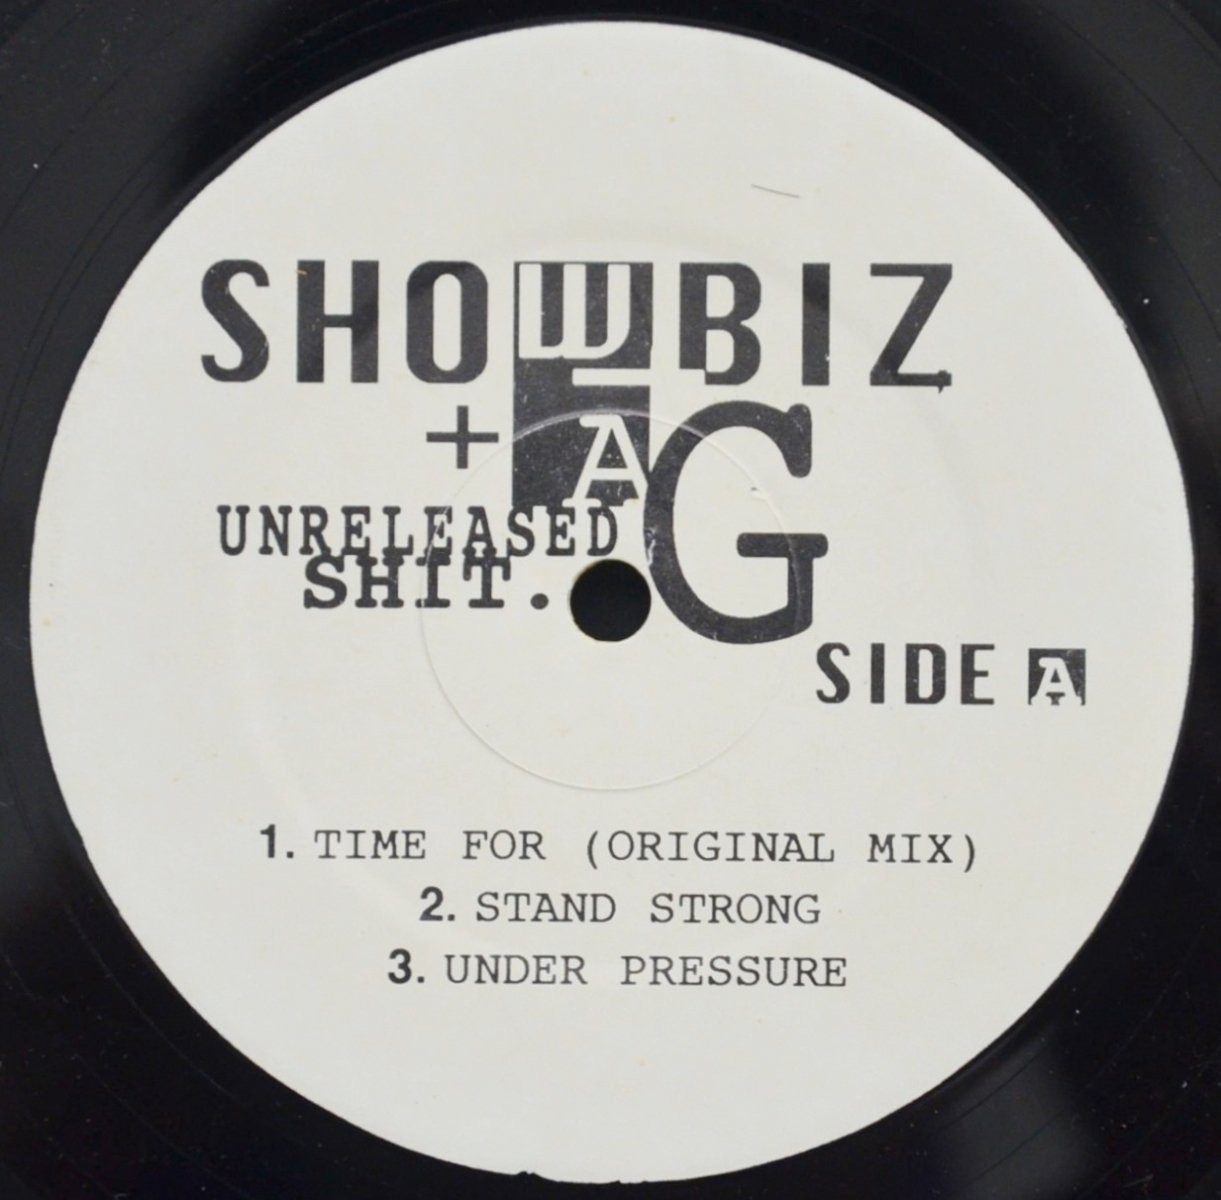 SHOWBIZ & A.G. ‎/ TIME FOR (ORIGINAL MIX) / UNDER PRESSURE (UNRELEASED SHIT.) (12